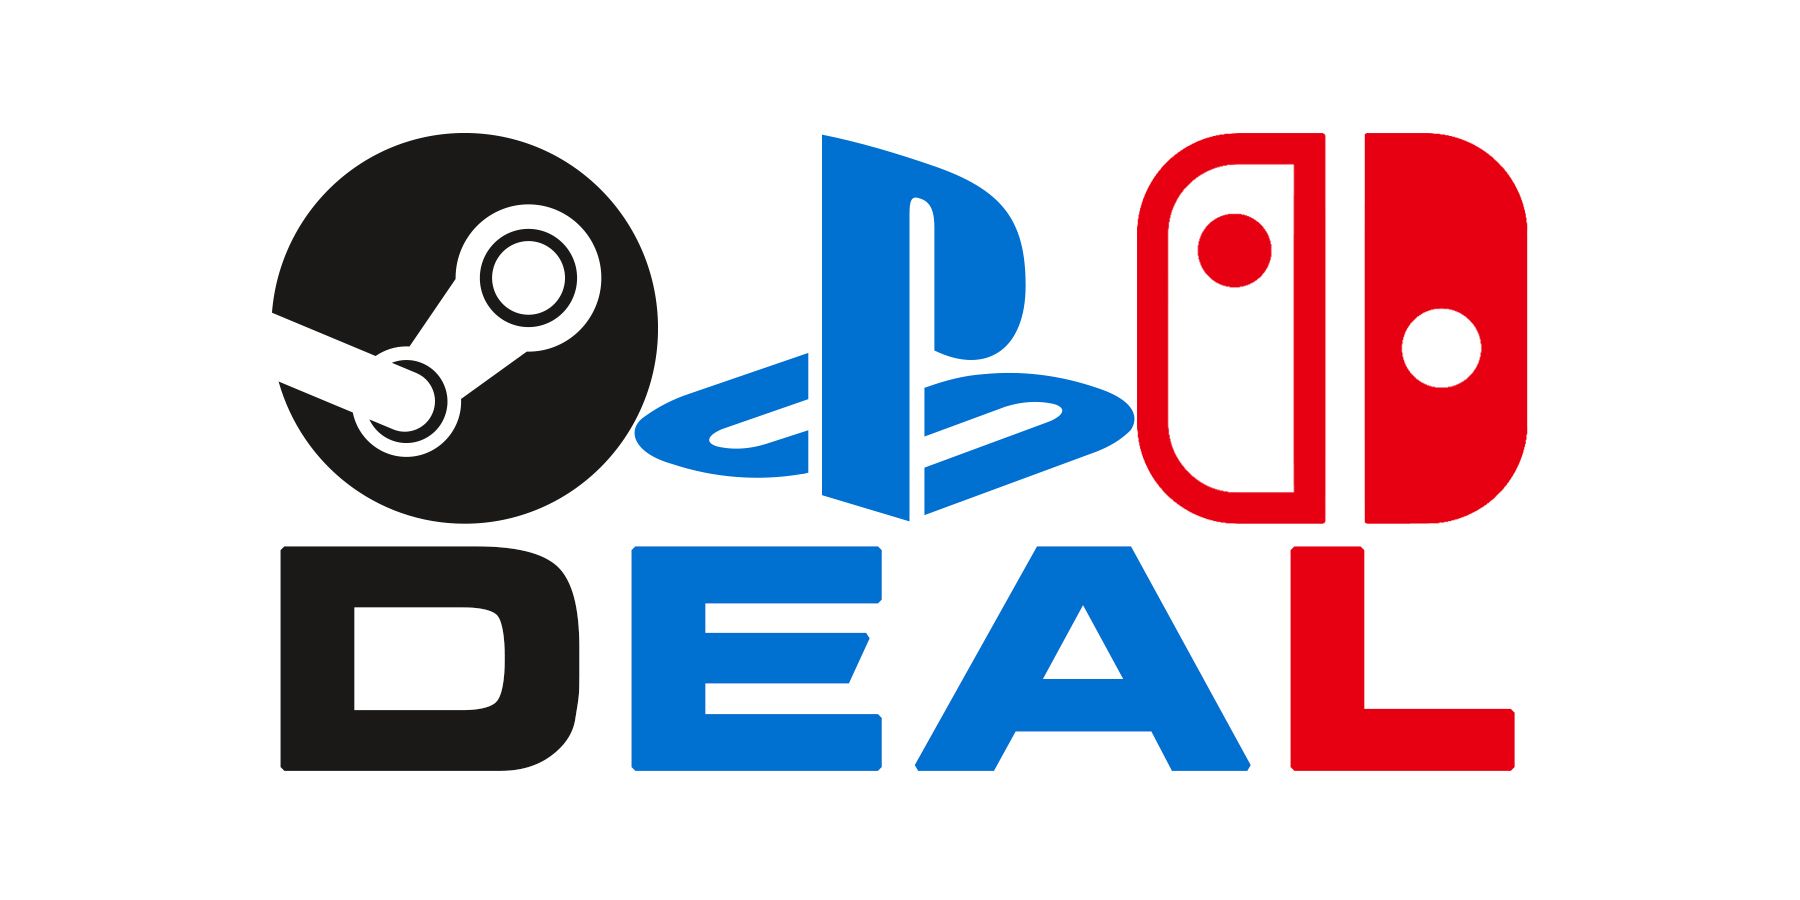 DEAL tagline below Steam Sony PlayStation Nintendo Switch logo submarks on white background